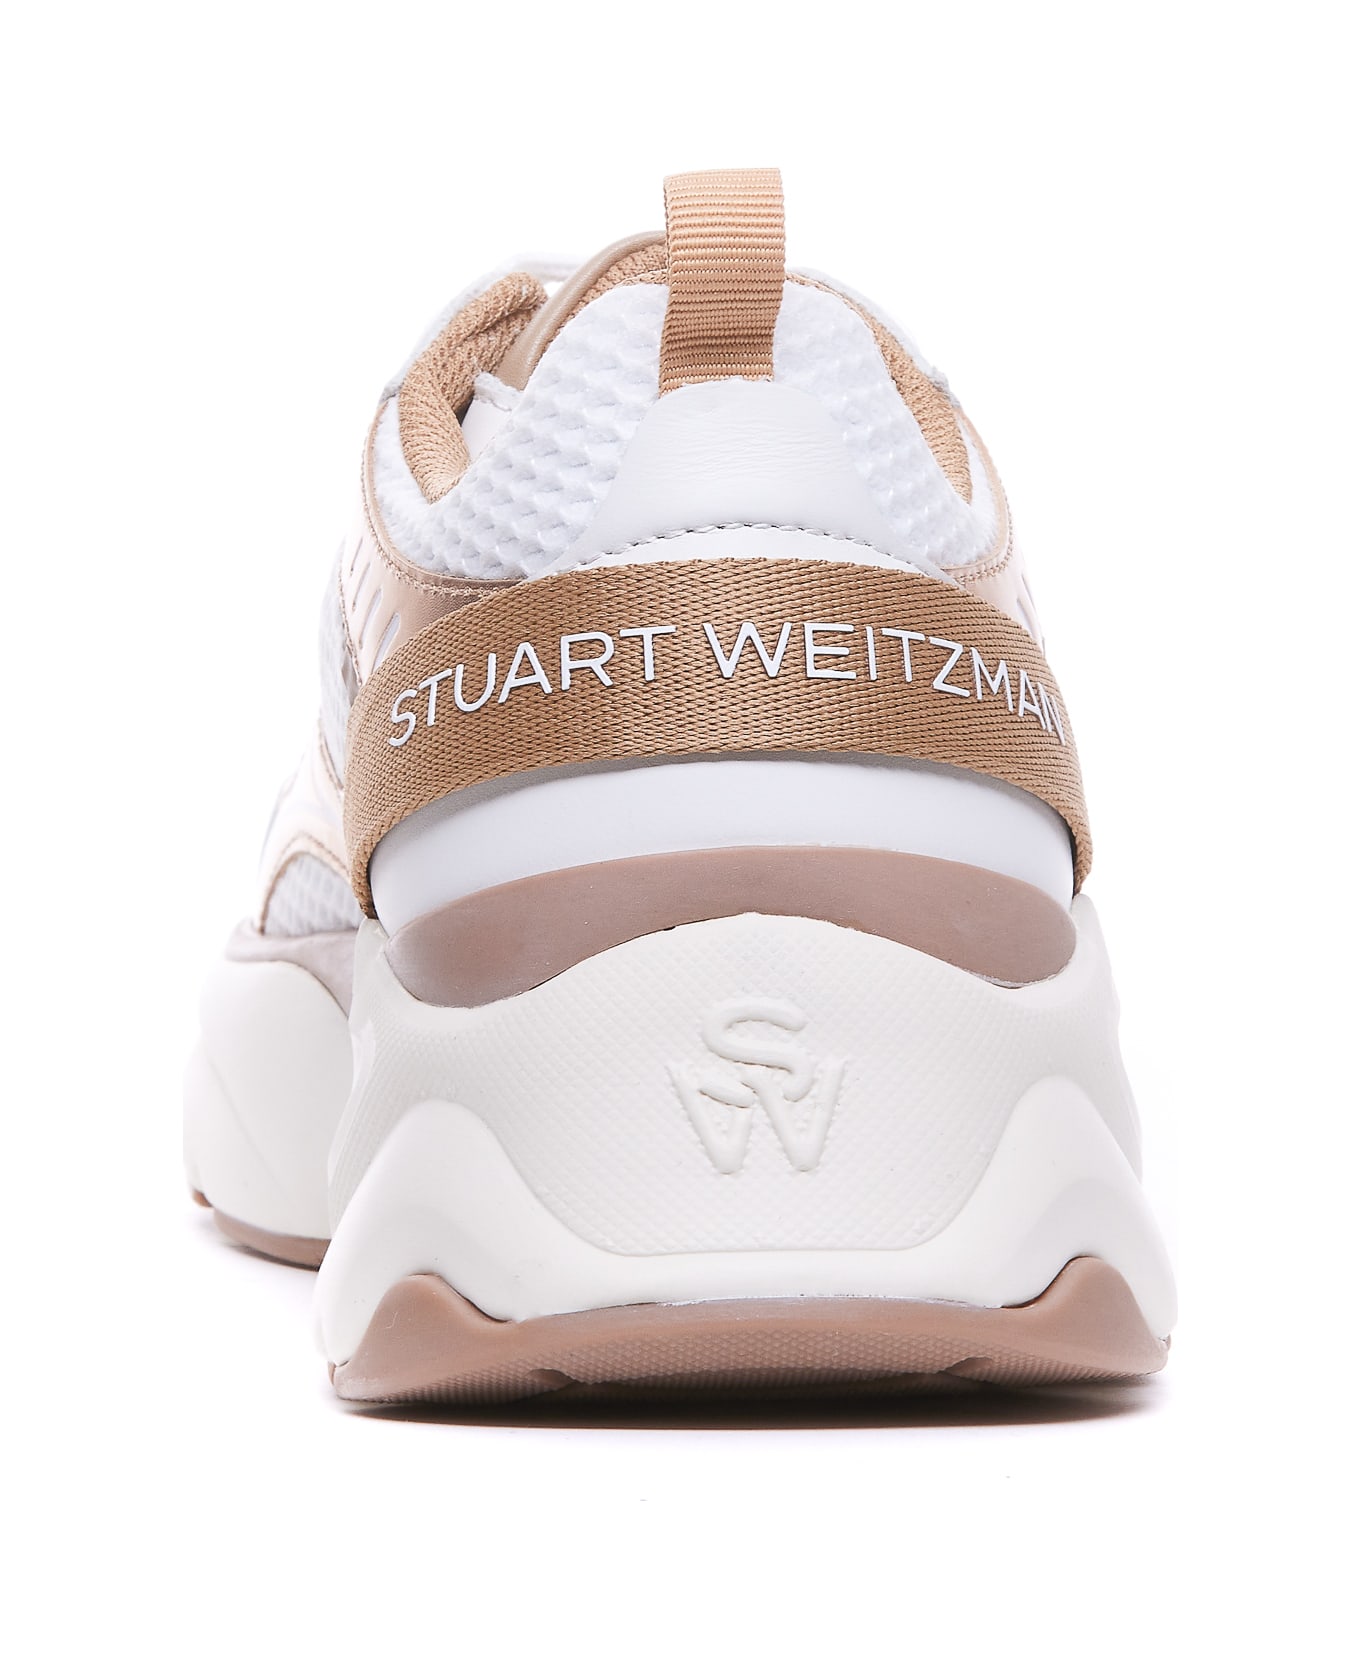 Stuart Weitzman Trainer Sneakers - White スニーカー